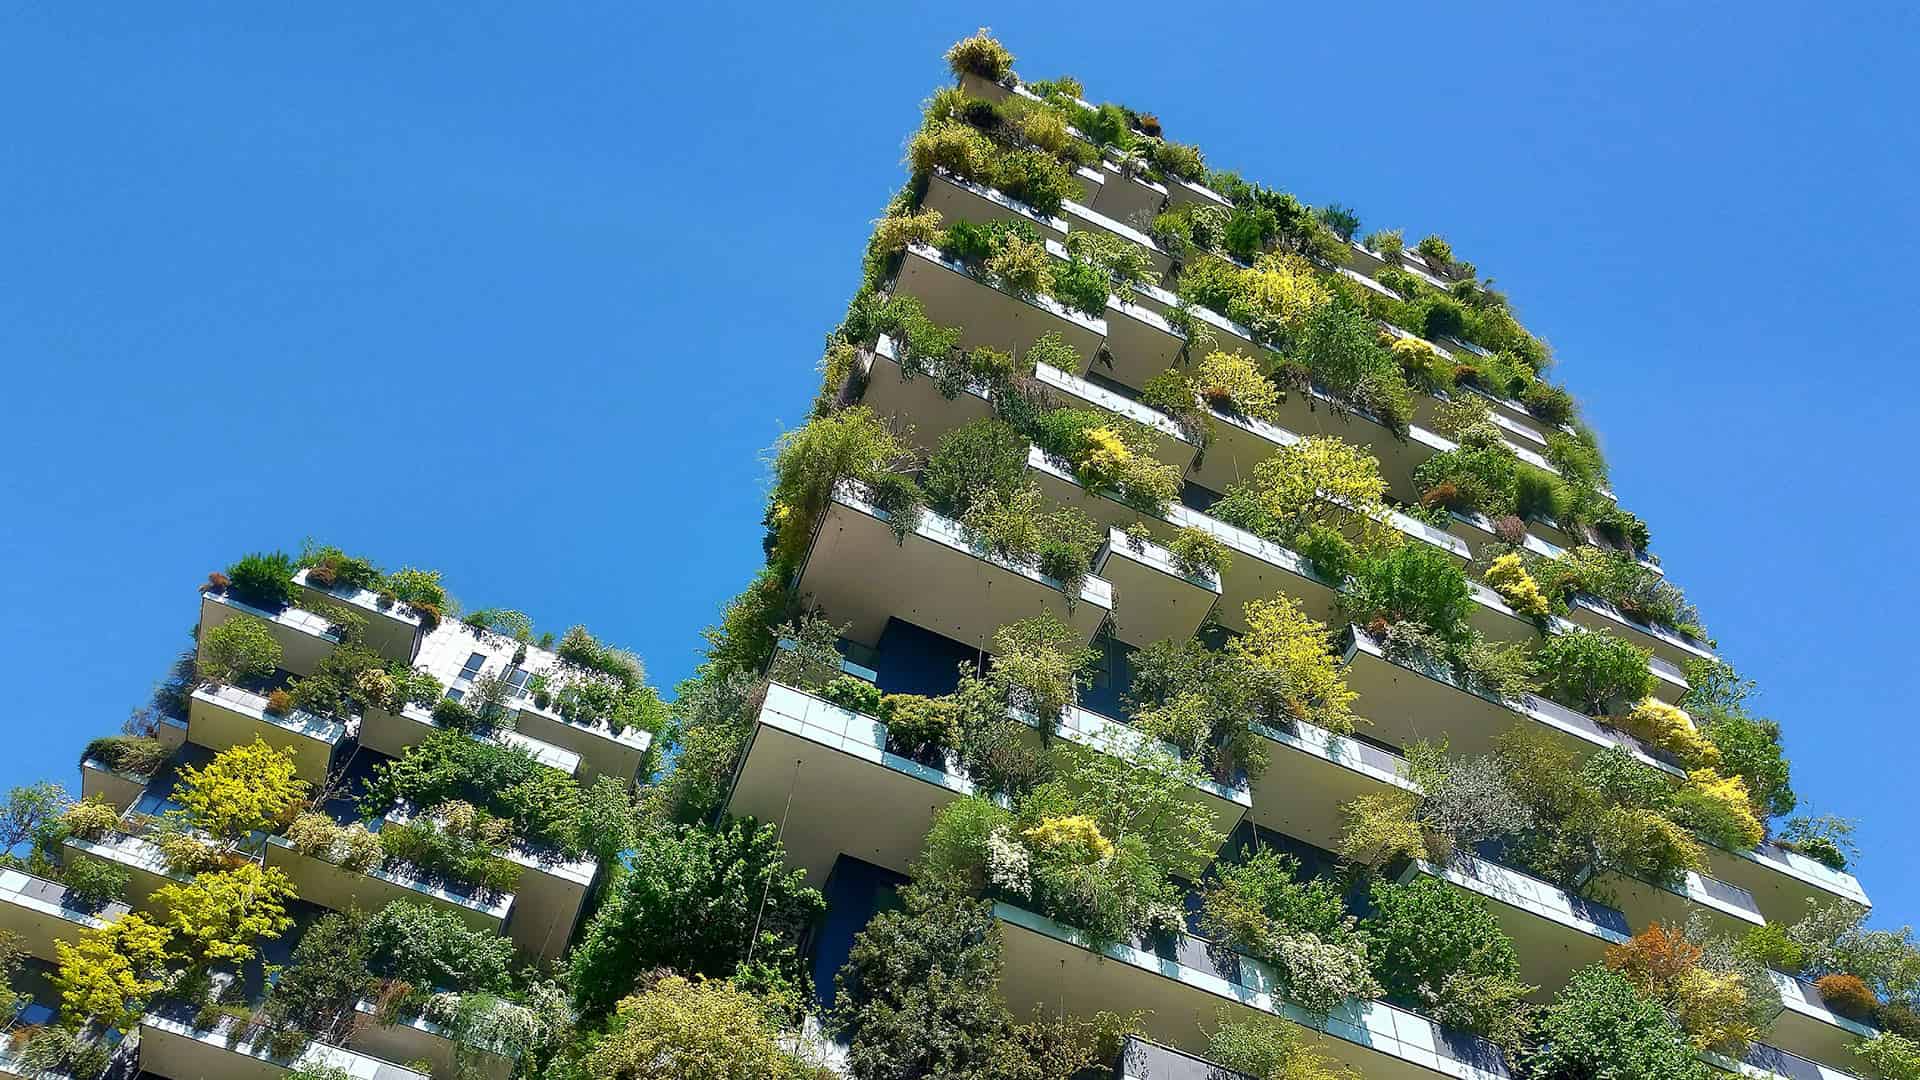 Arquitectura vegetal: Sus avancesen Chile y el mundo.